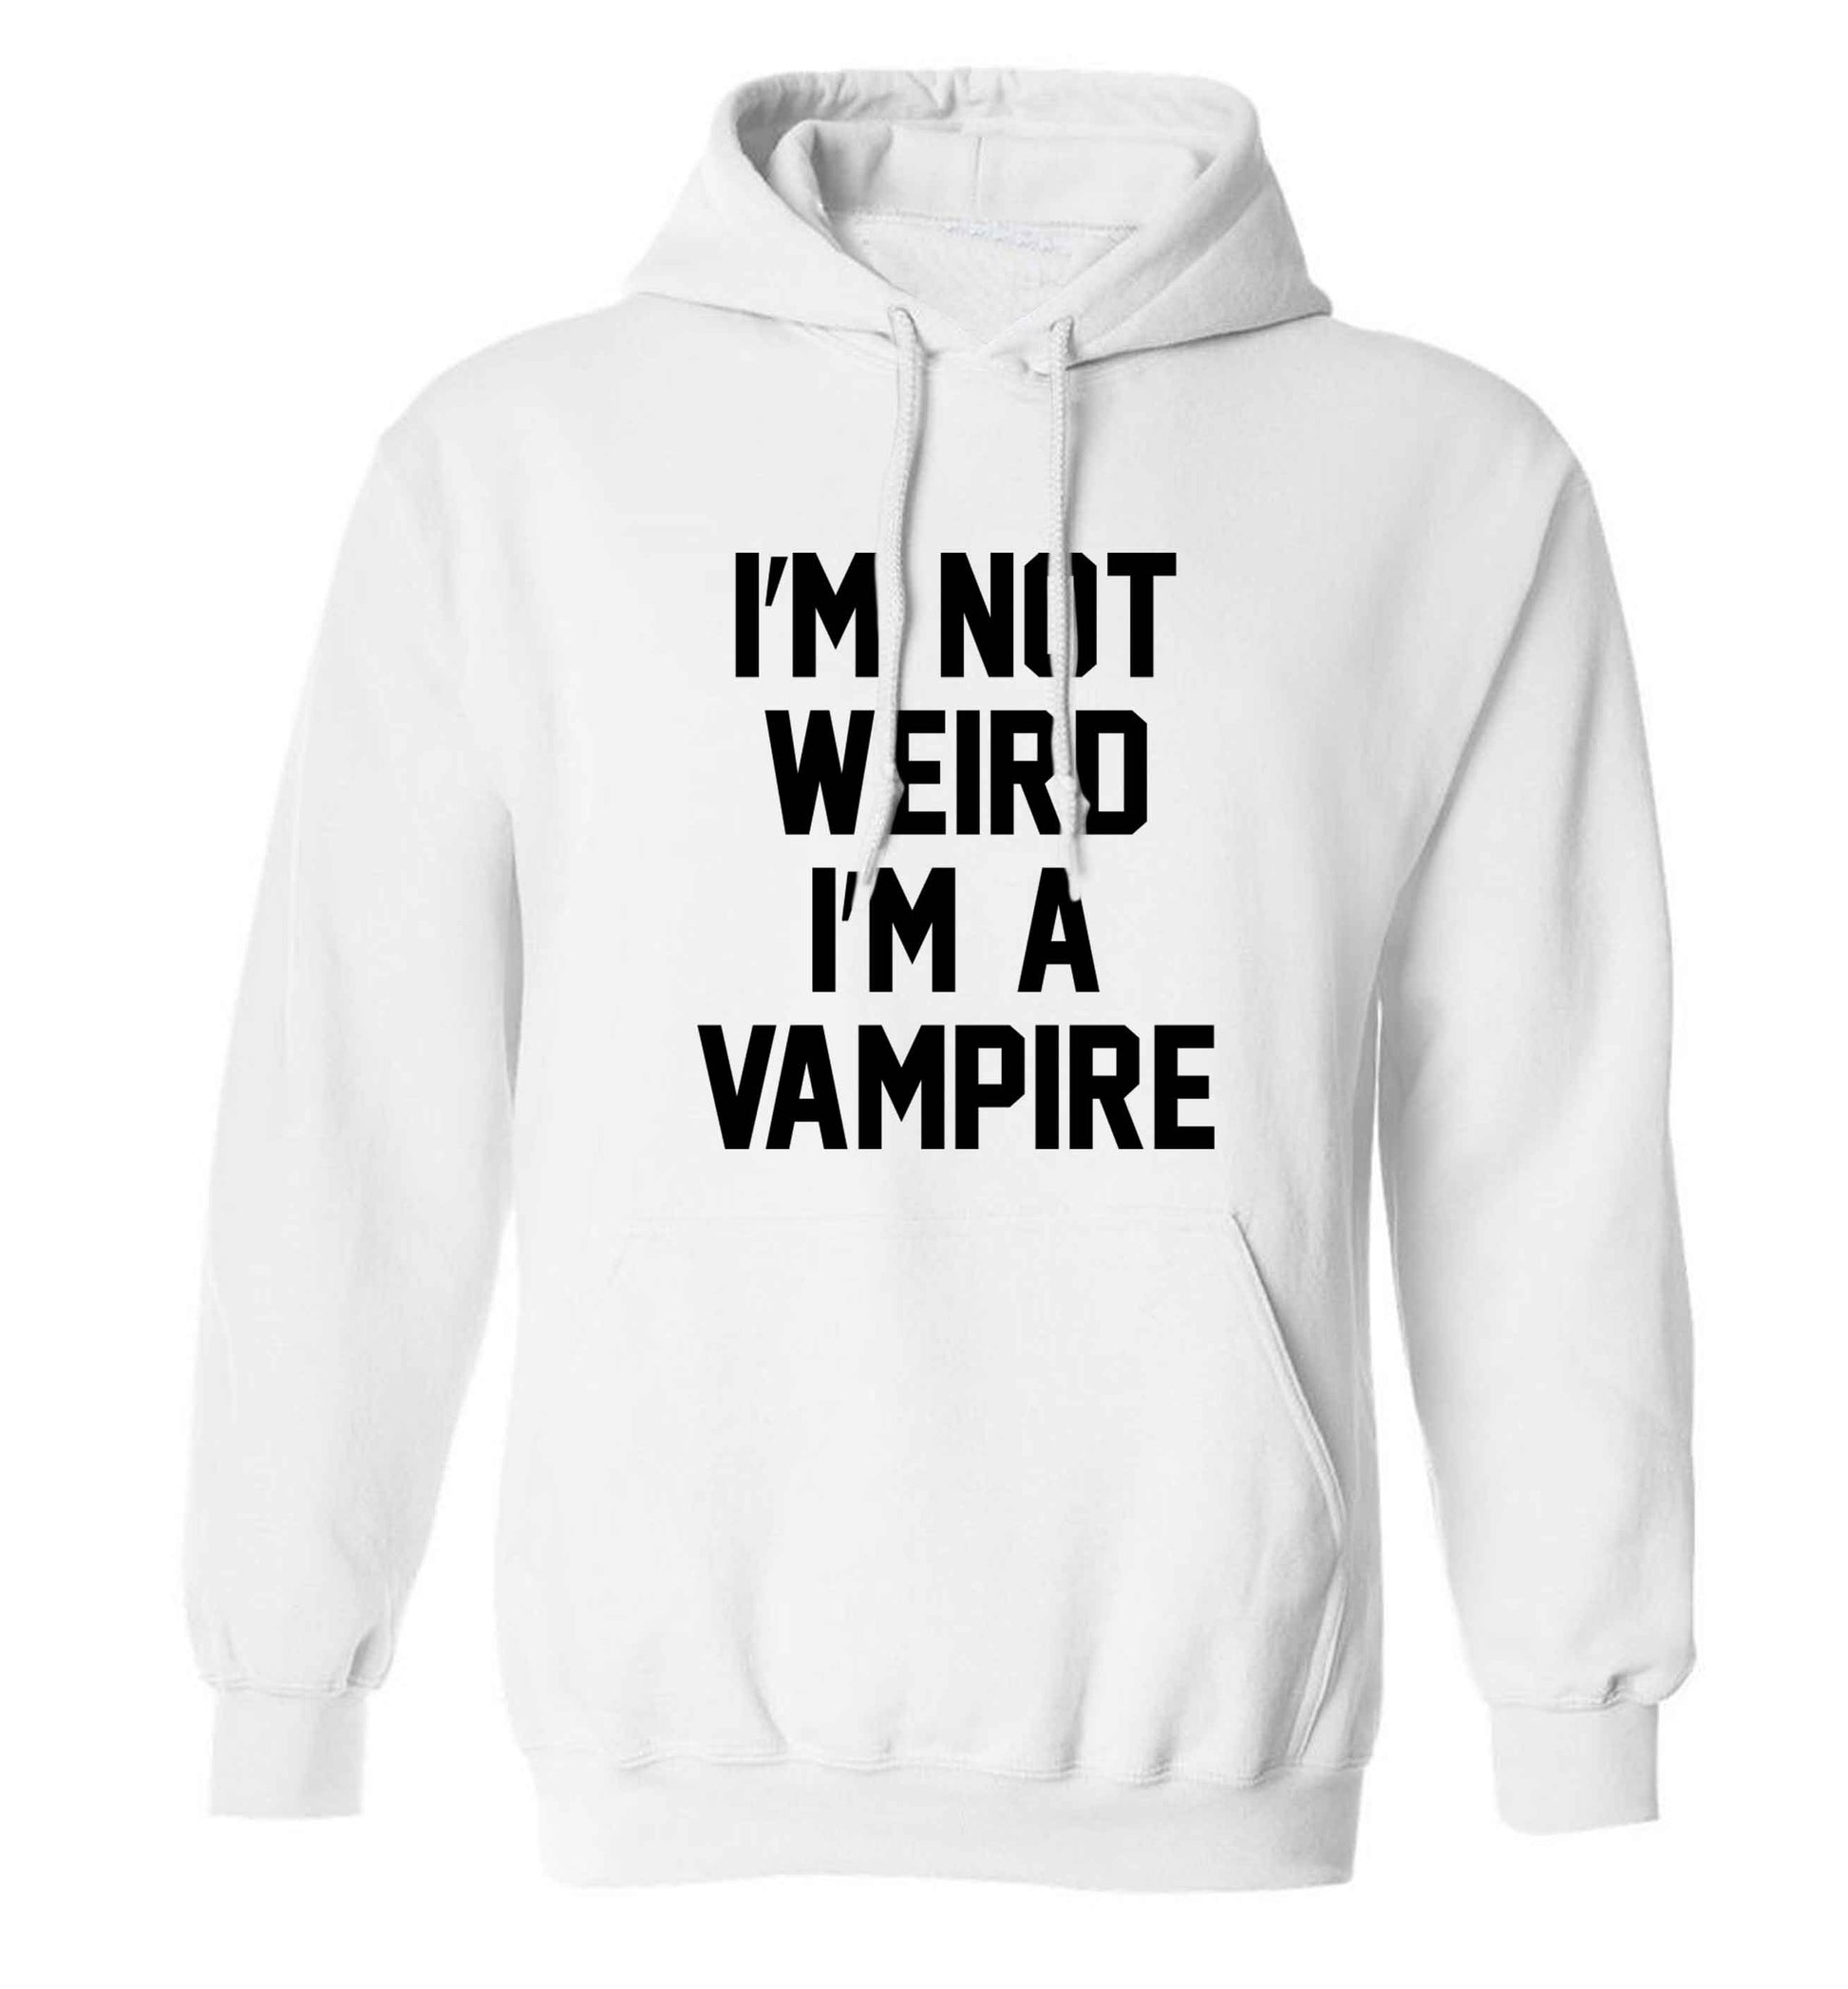 I'm not weird I'm a vampire adults unisex white hoodie 2XL